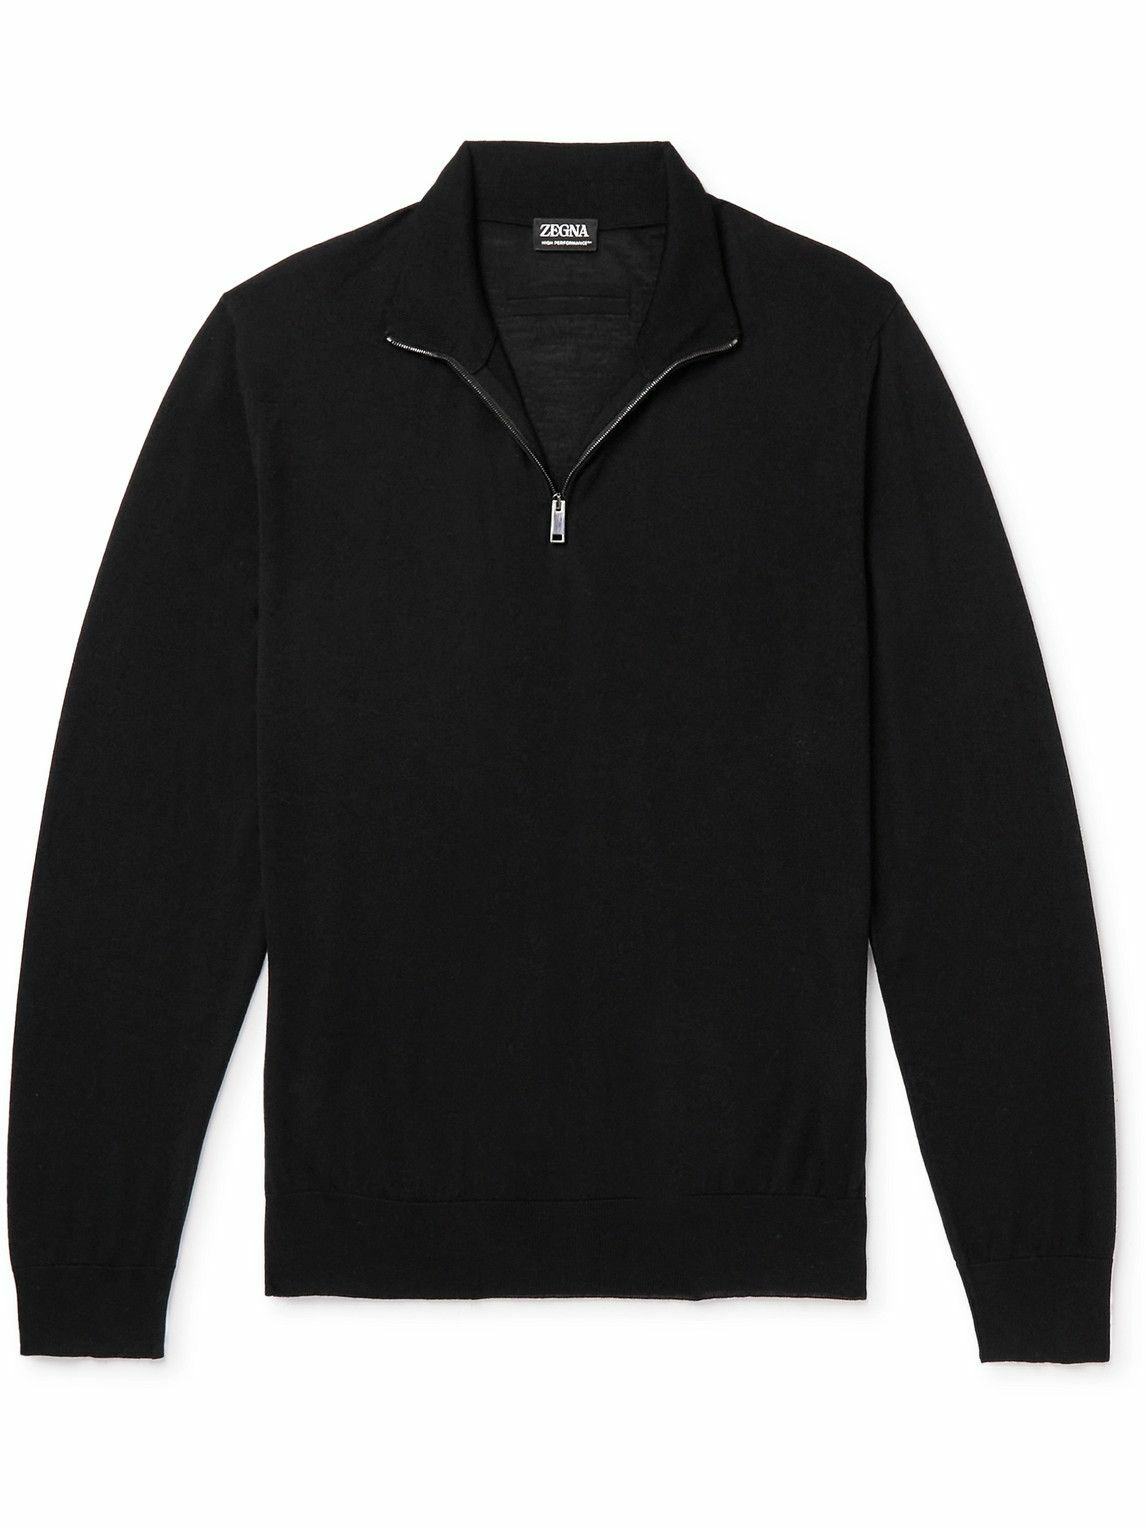 Zegna - Slim-Fit Wool Half-Zip Sweater - Black